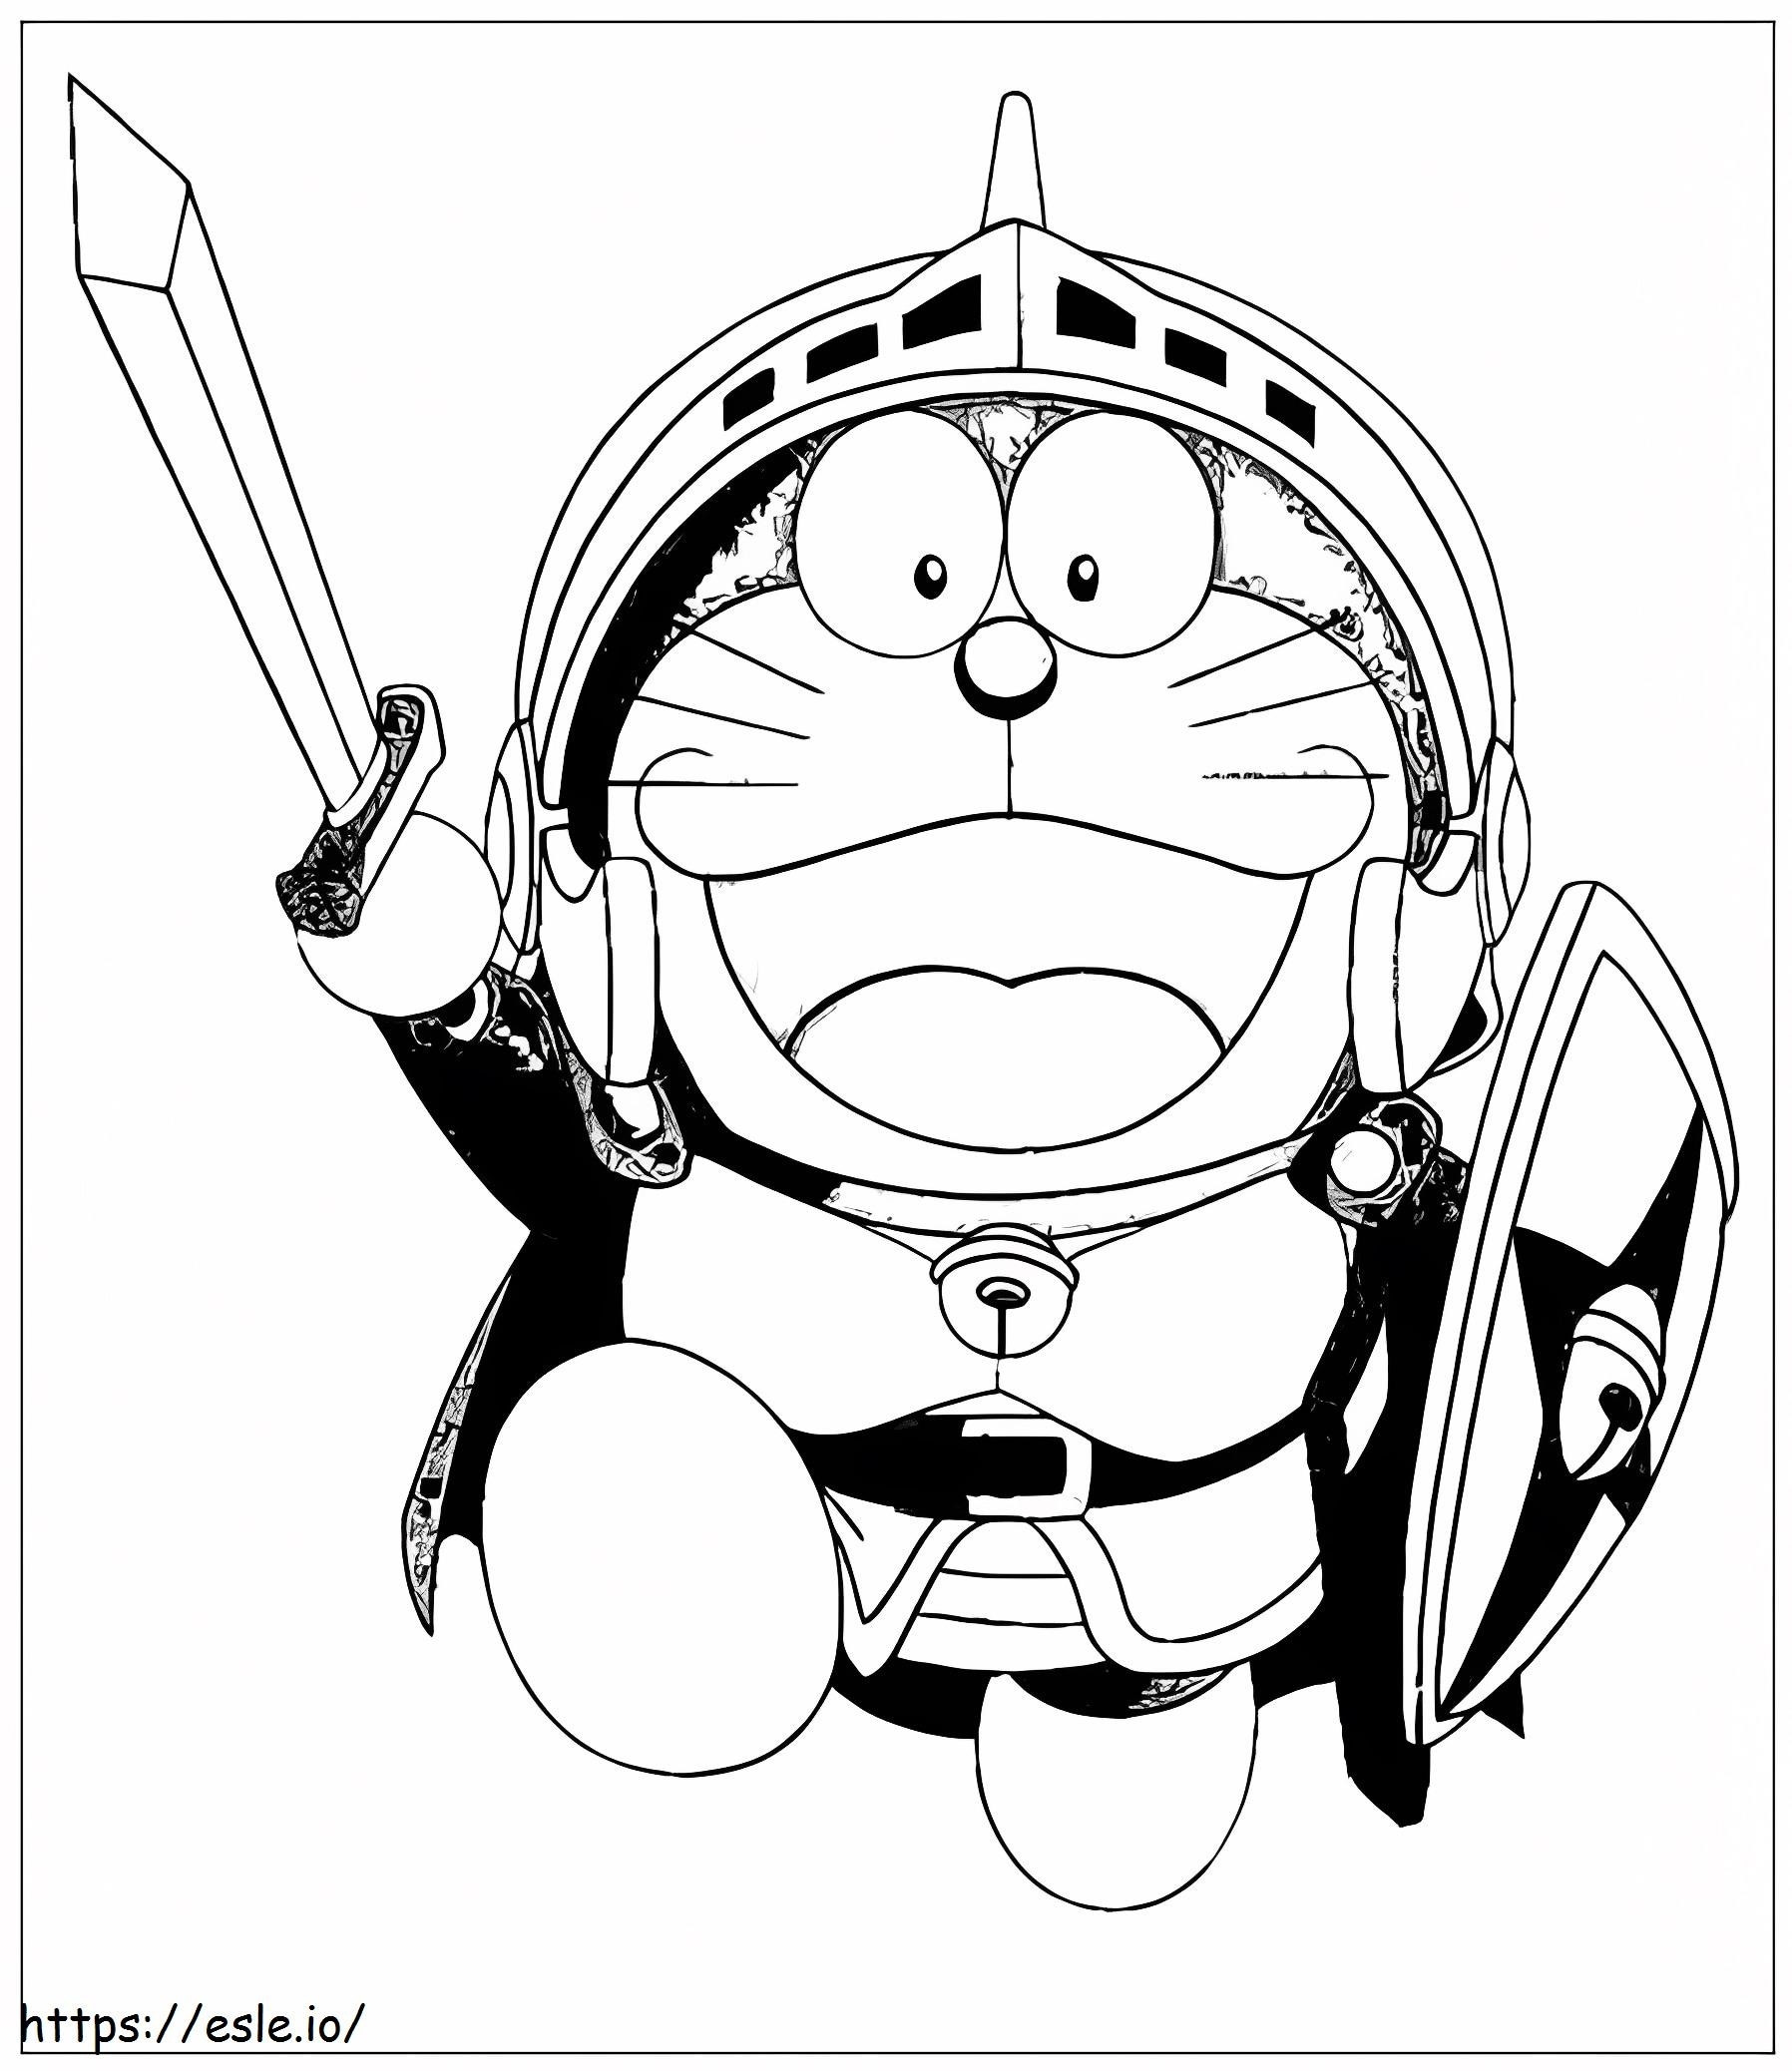 Caballero Doraemona kolorowanka